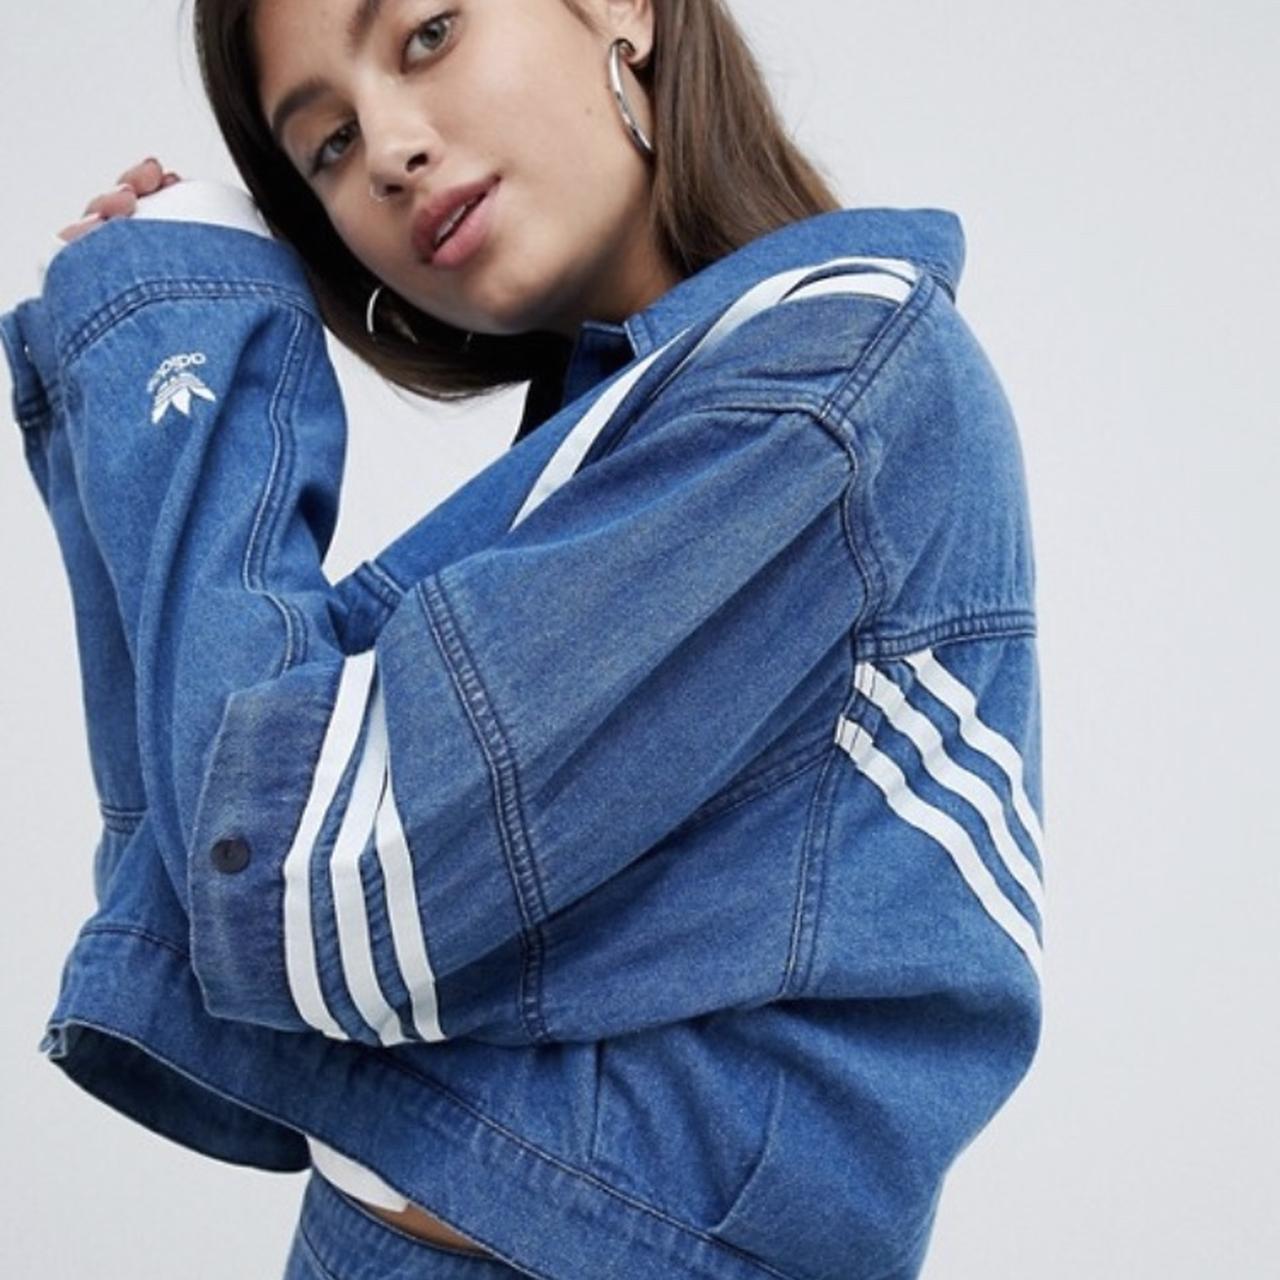 Adidas Originals Women's Jacket Depop